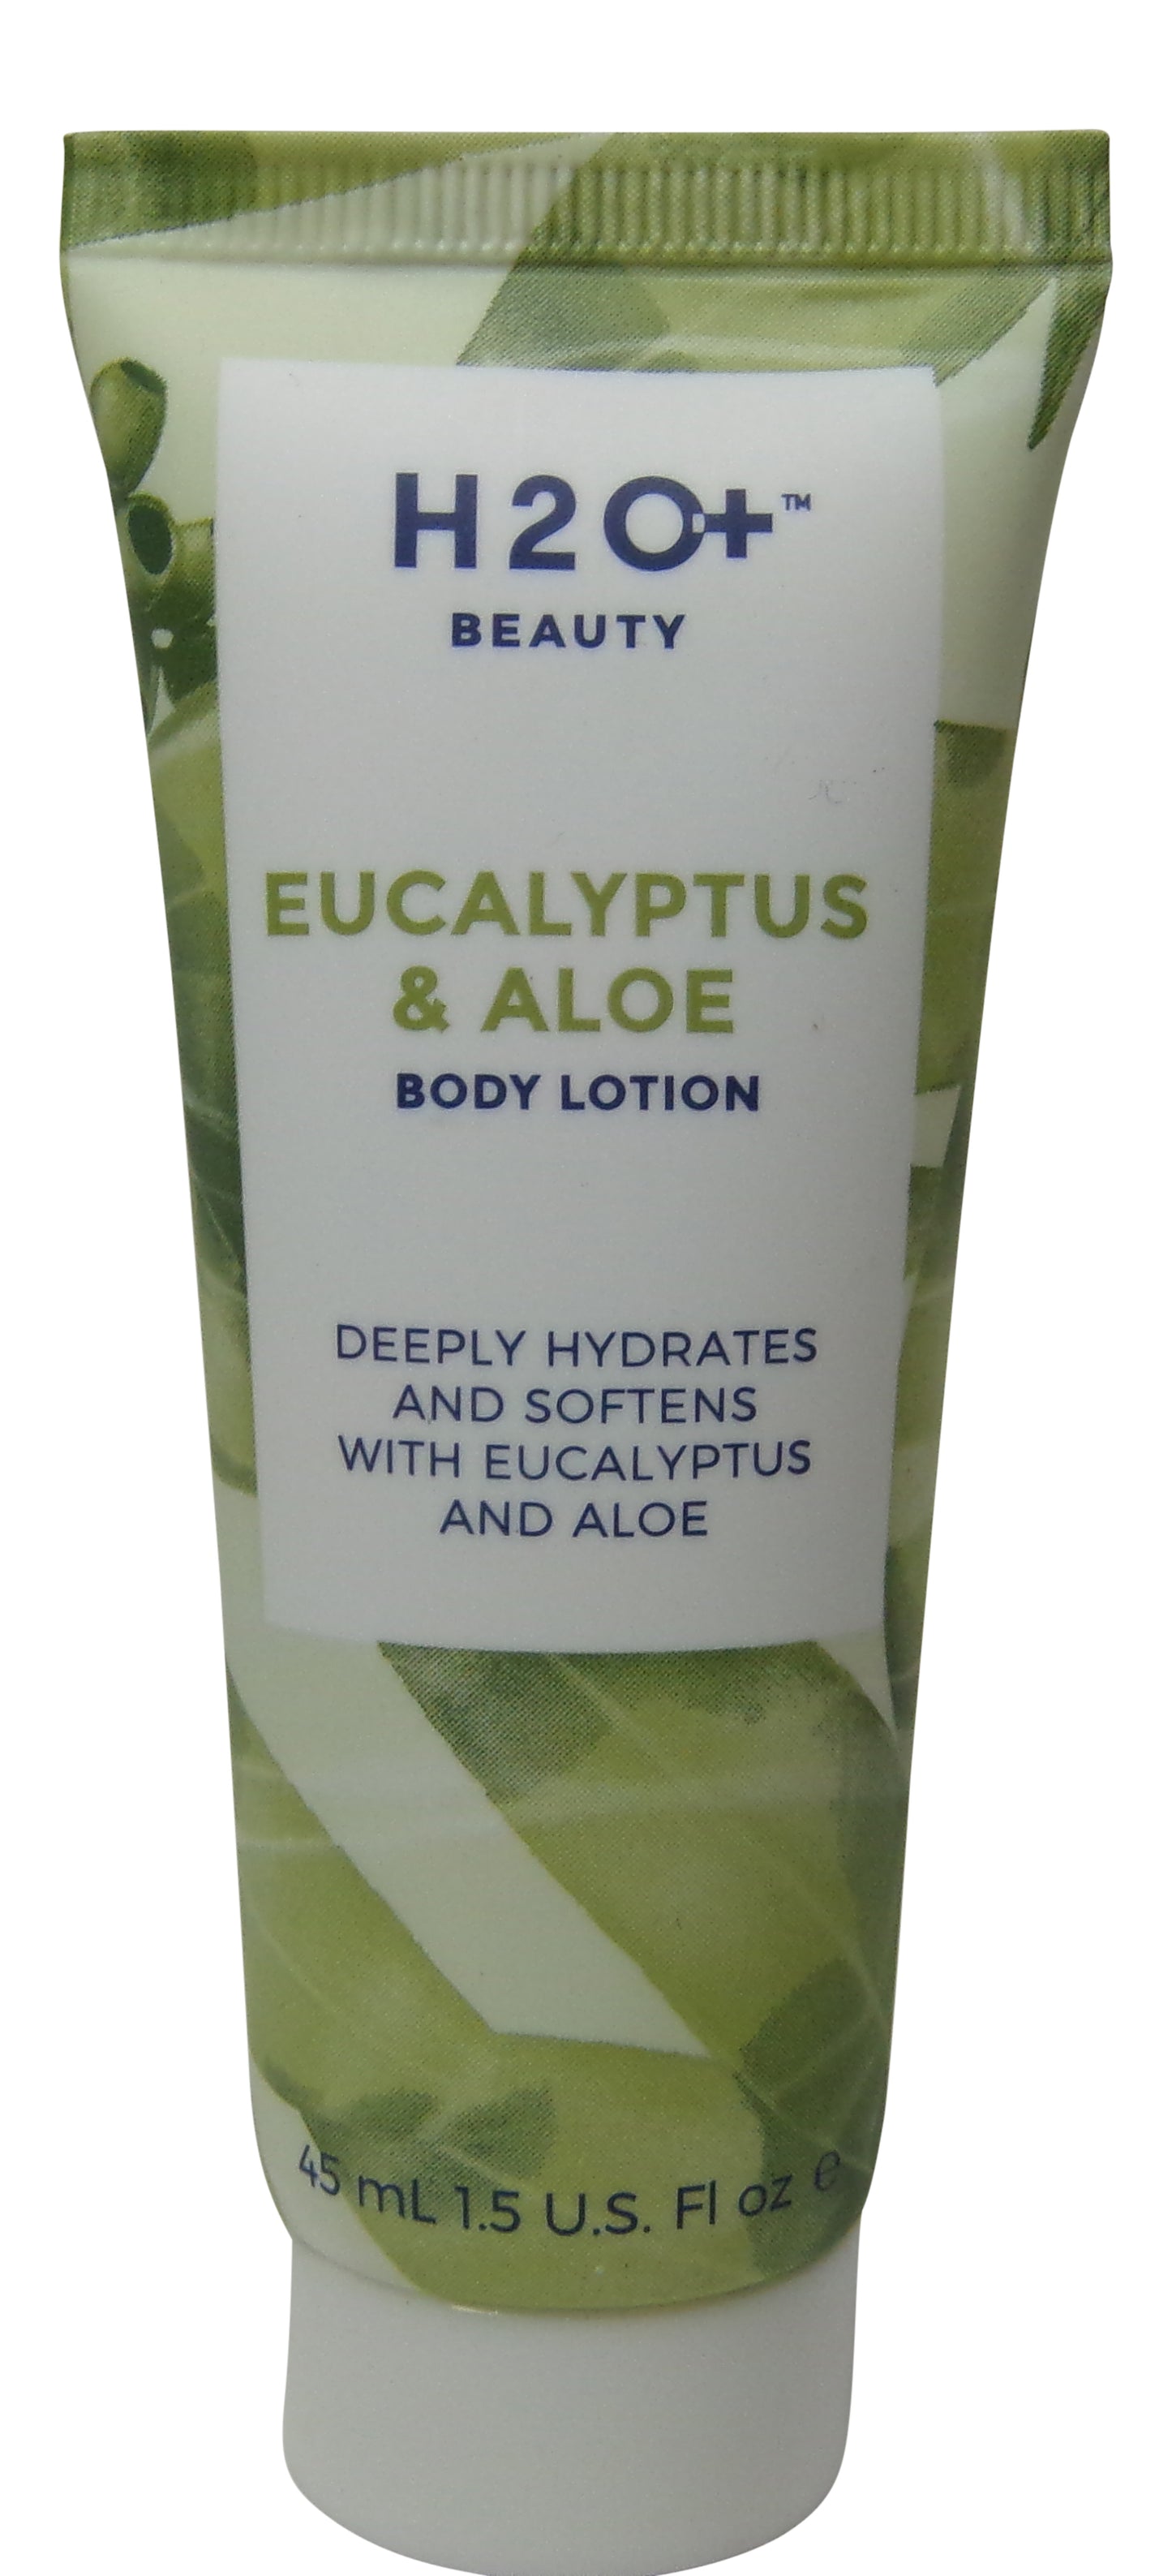 H2O Plus Eucalyptus & Aloe Body Lotion lot of 12 each 1.5oz bottles. Total of 18oz